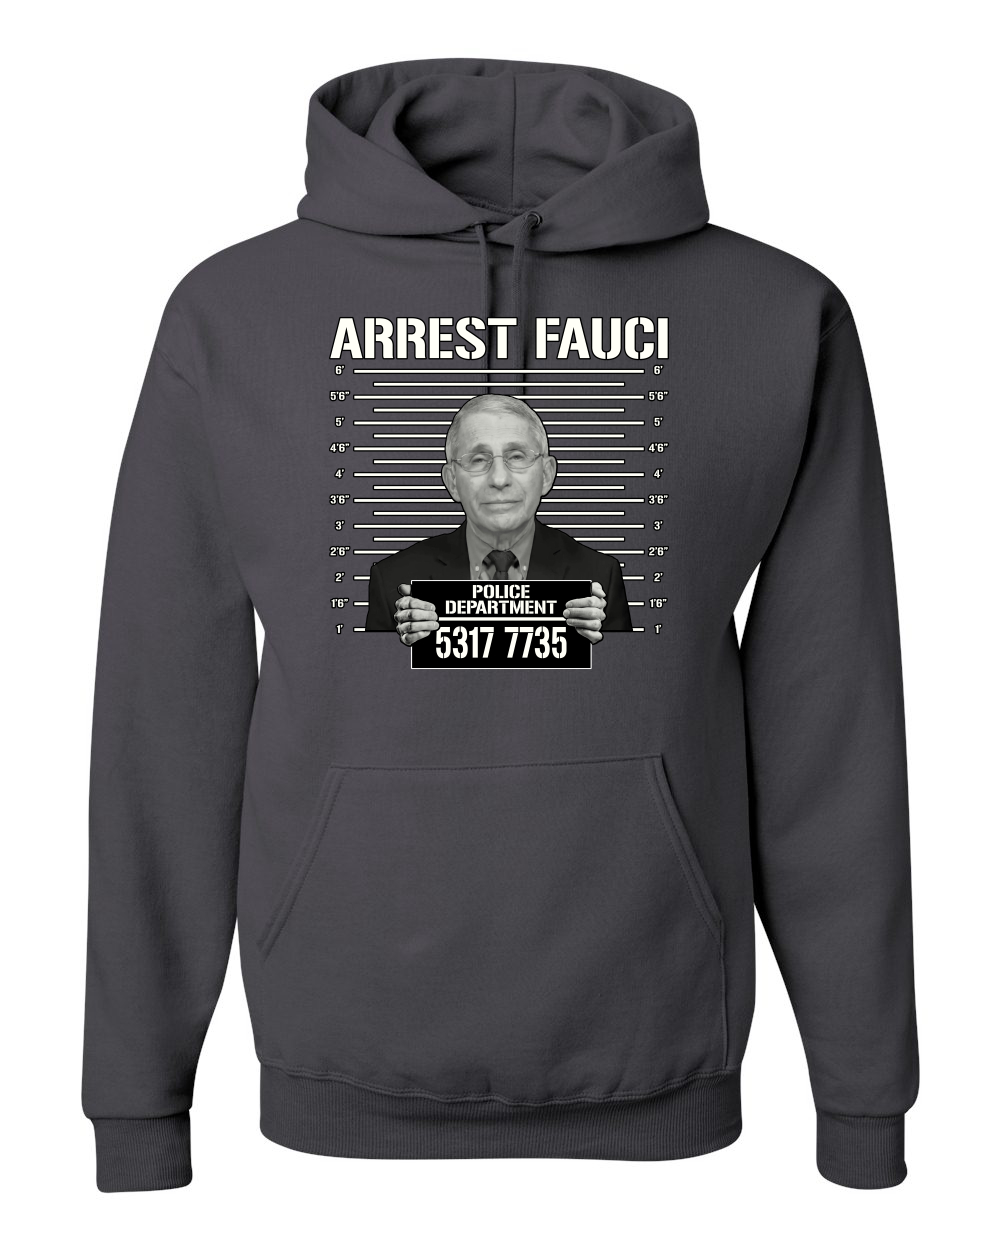 thumbnail 4  - Arrest Fauci Mugshot Political Unisex Graphic Hooded Sweatshirt